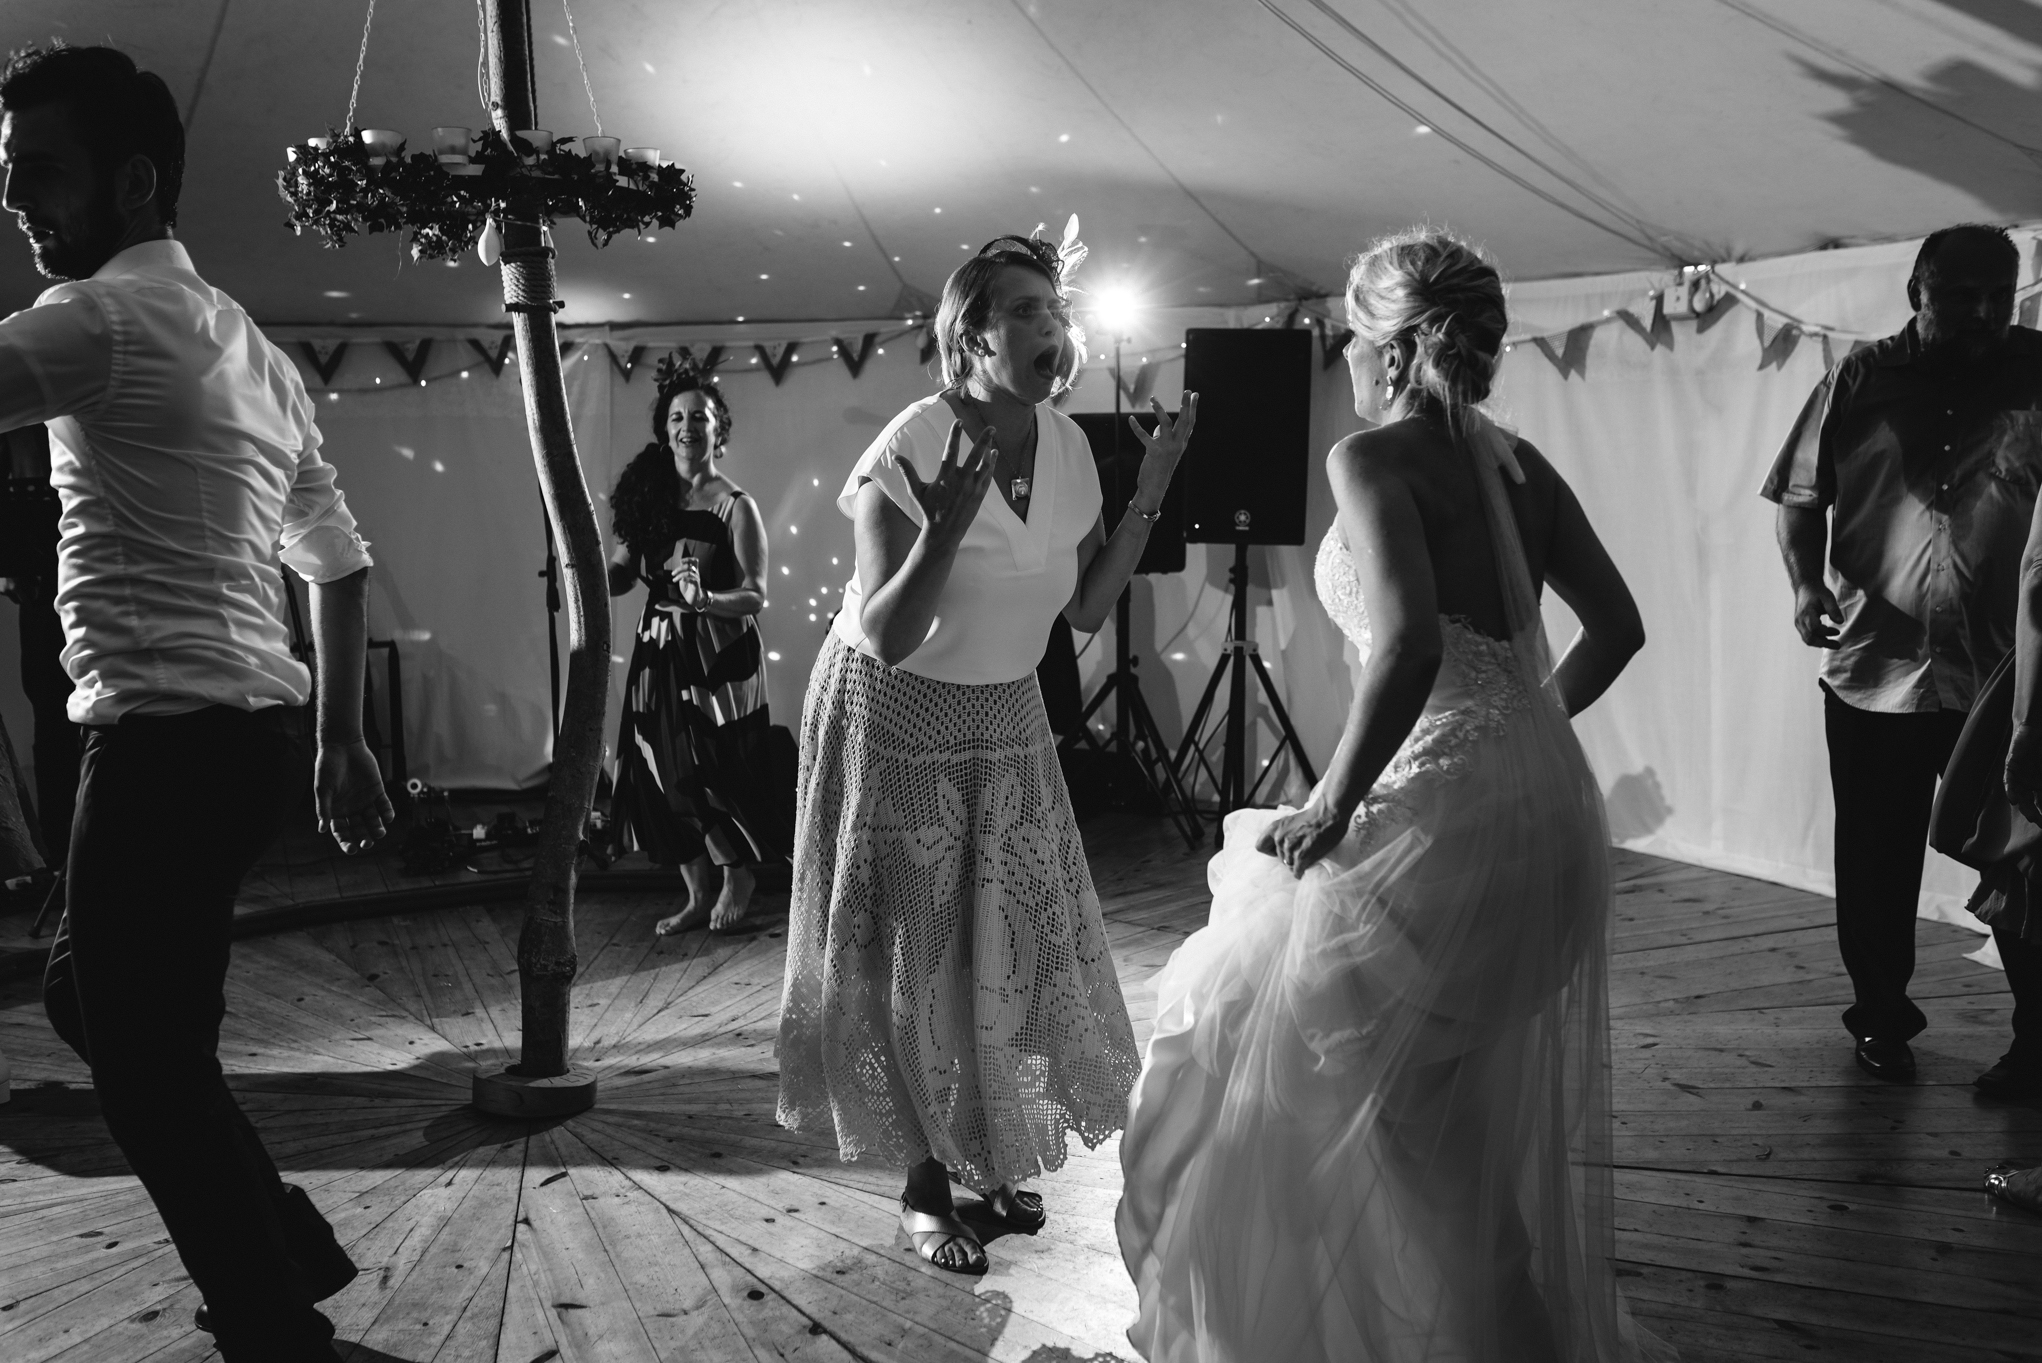 Copy of Bride &amp; Guests Dancing at Wedding Party